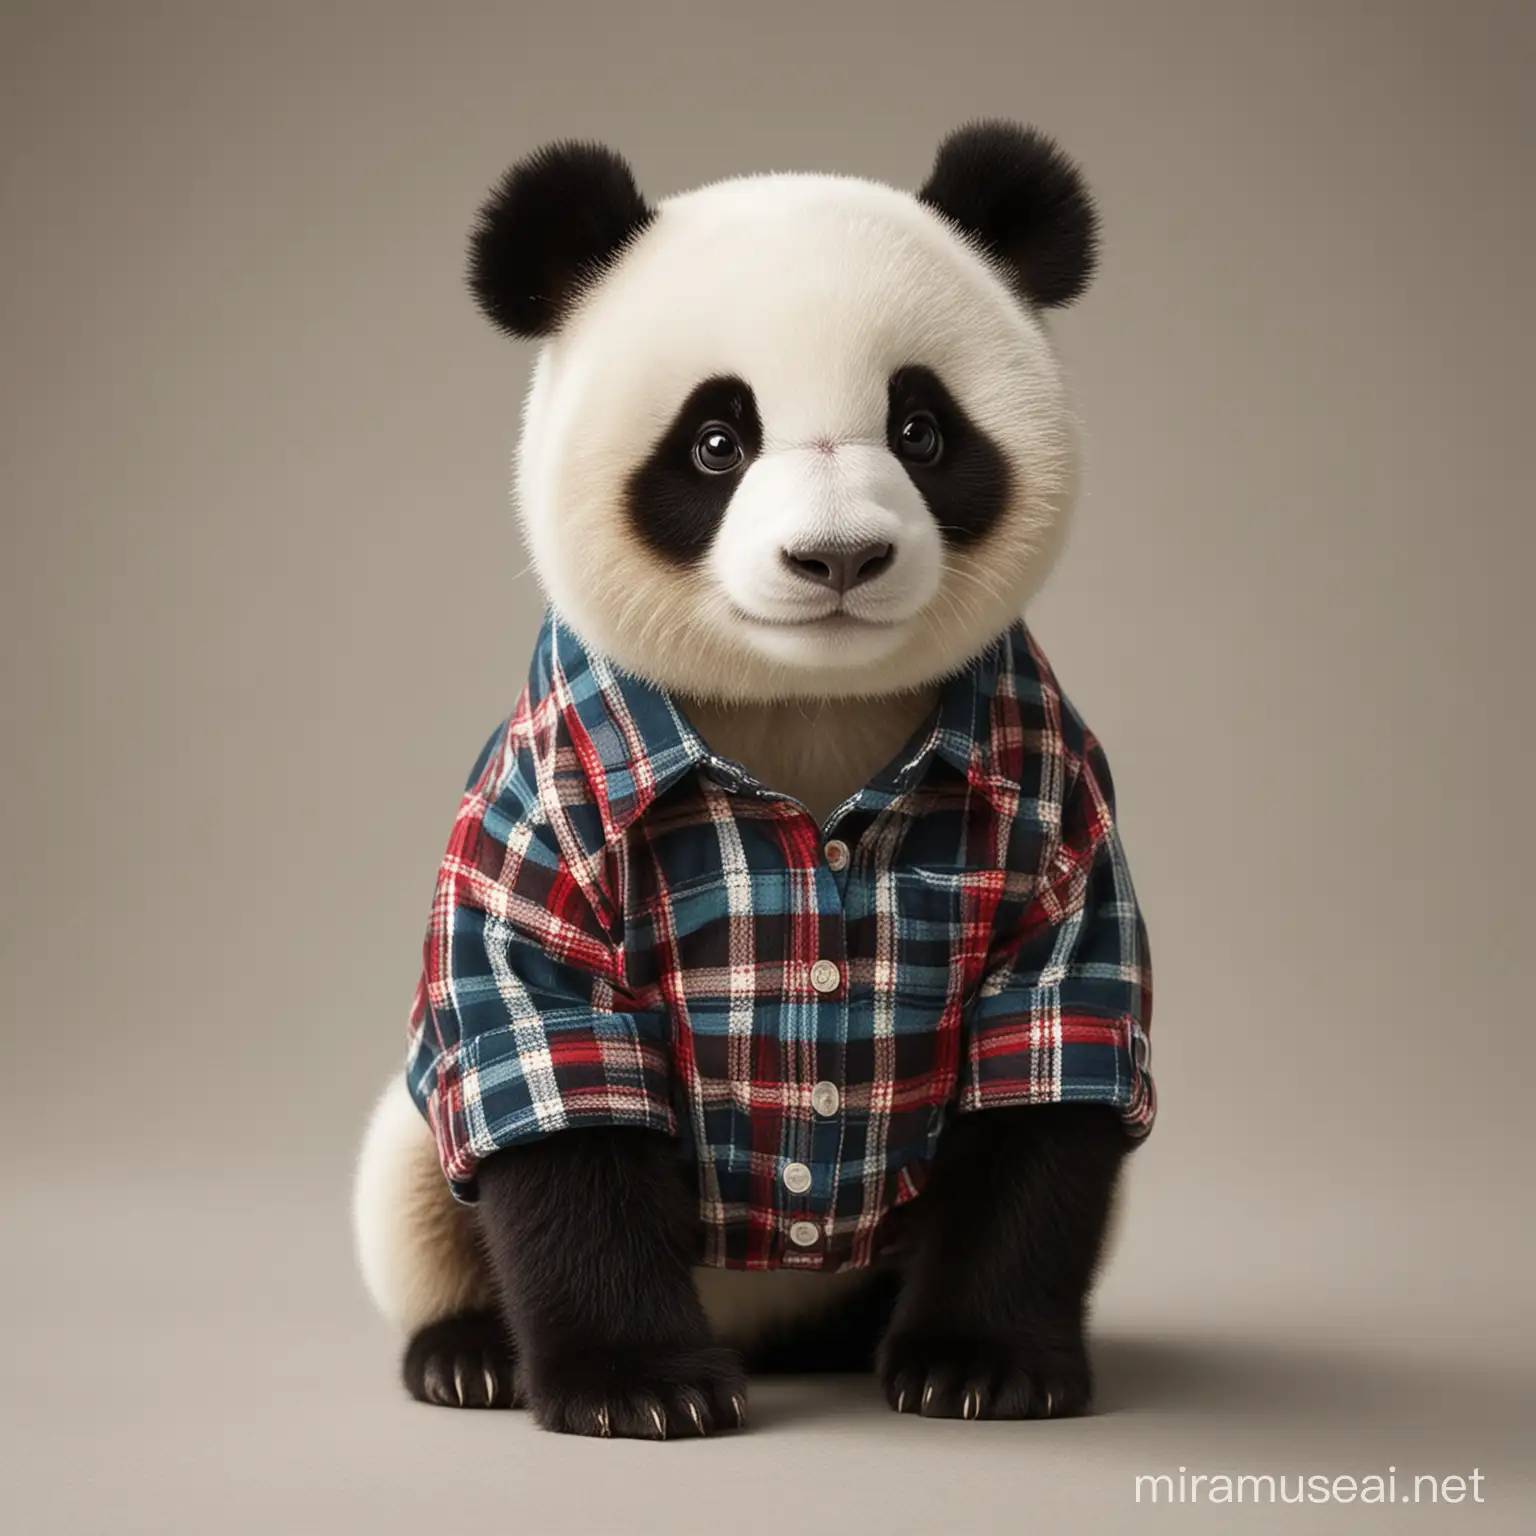 Panda wearing a plaid shirt